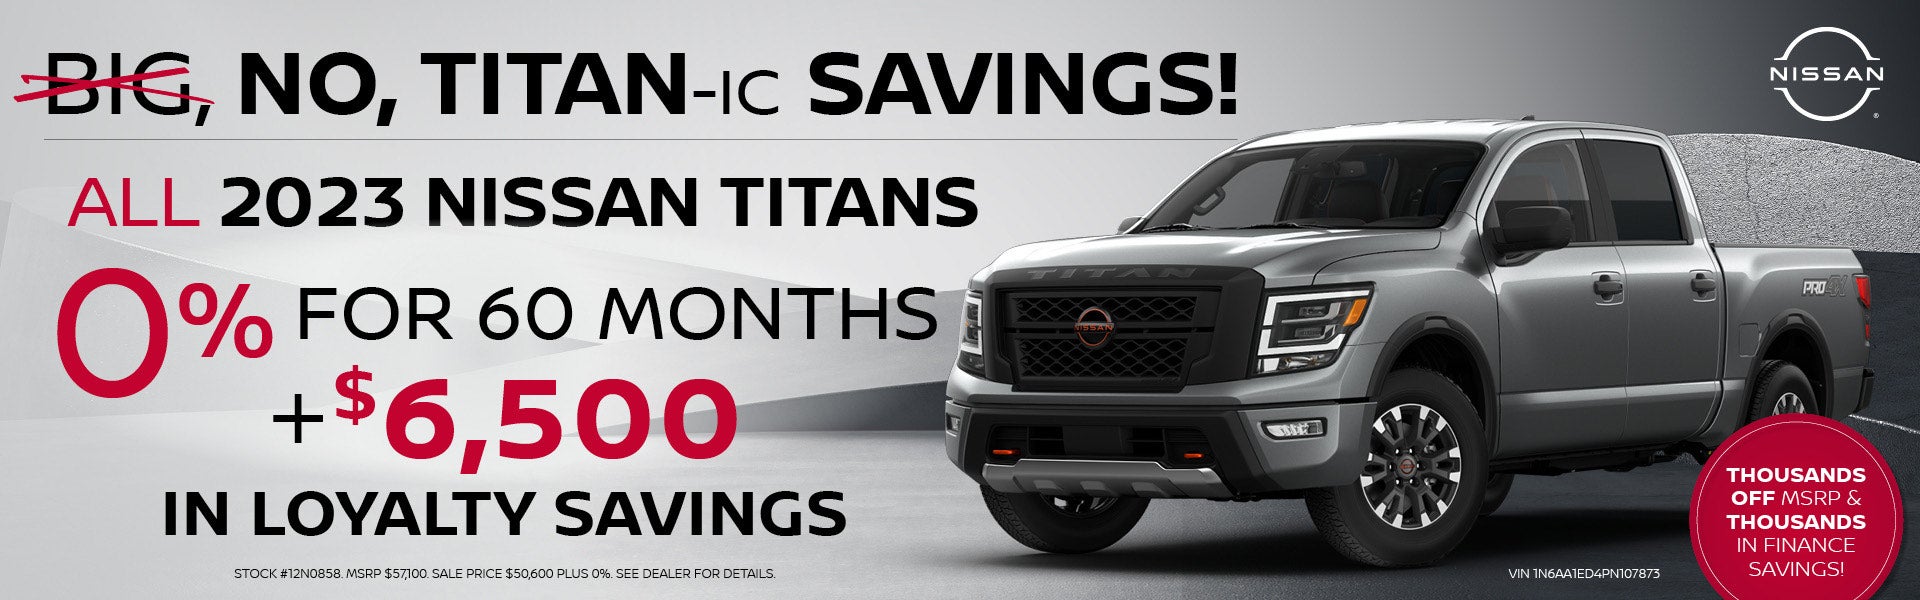 TITAN-ic Savings at Friendship Nissan!